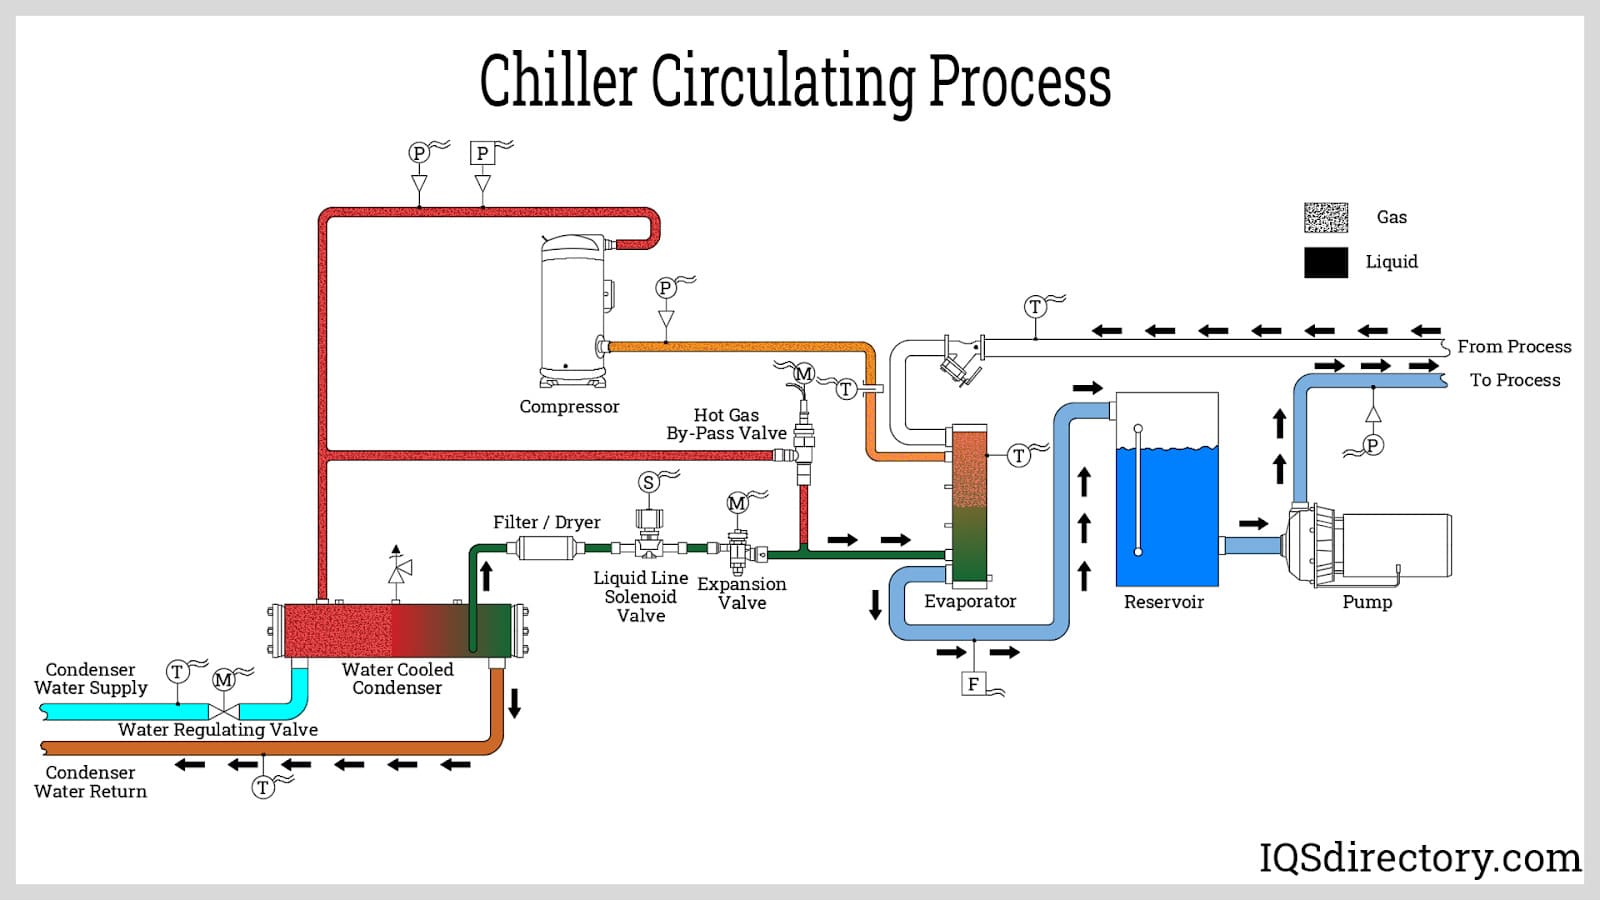 Chiller Circulating Process